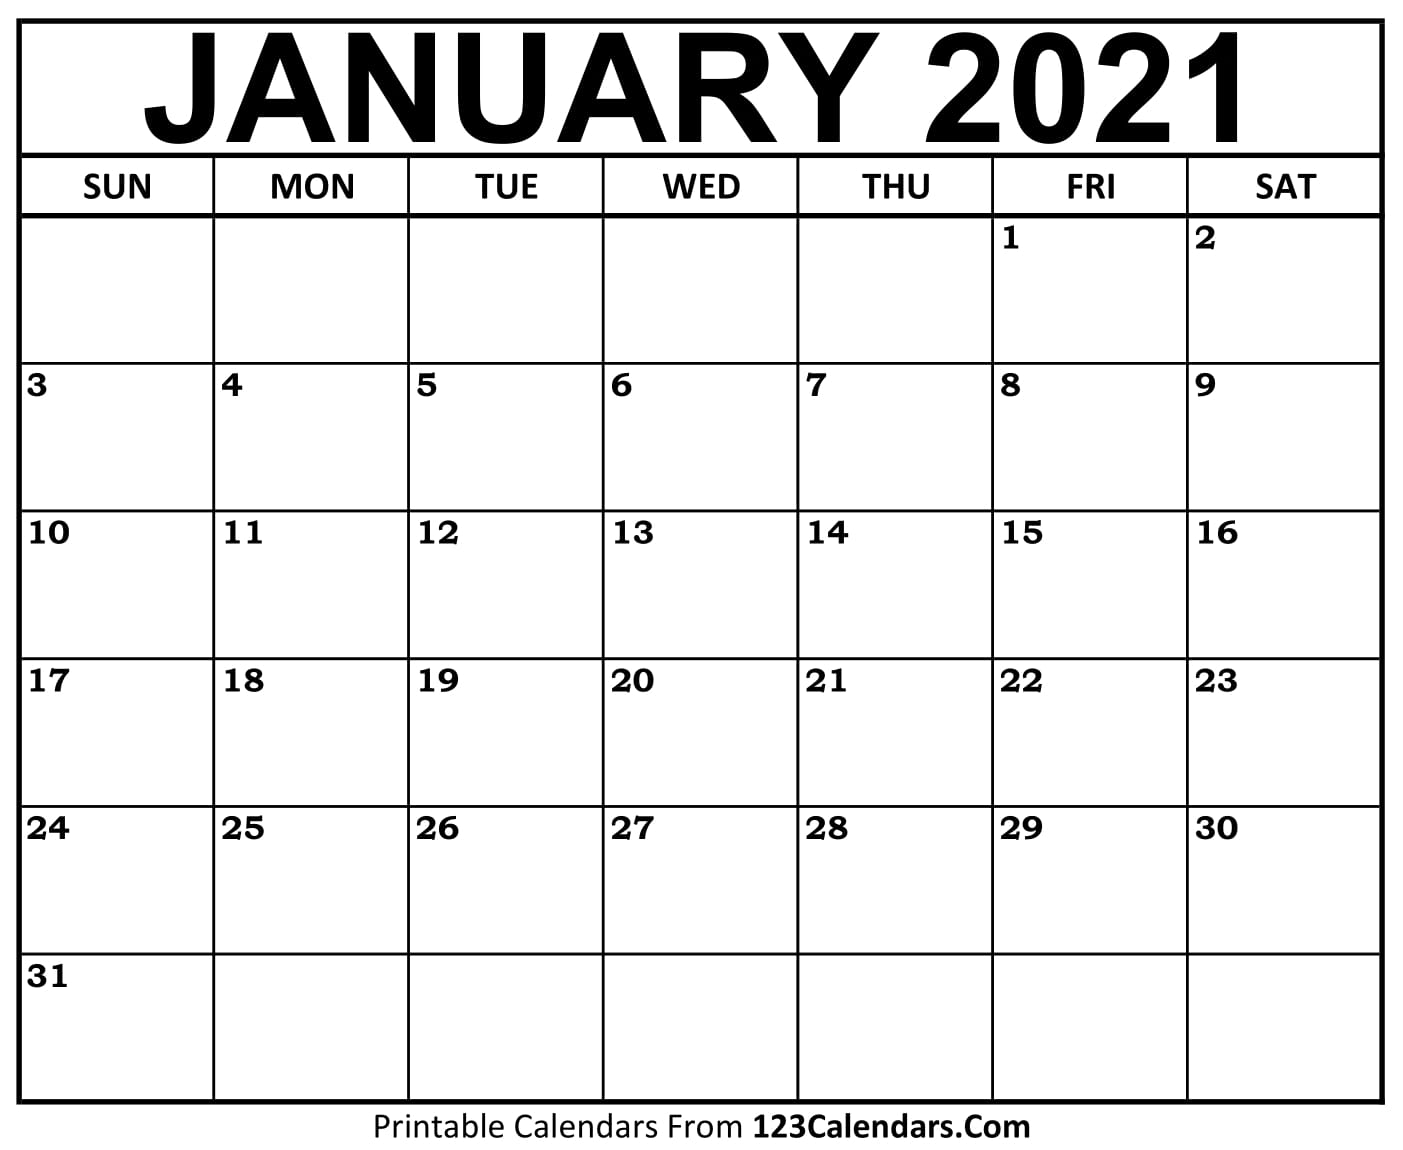 December 2022 January 2023 Calendar Printable Printable January 2022 Calendar Templates - 123Calendars.com